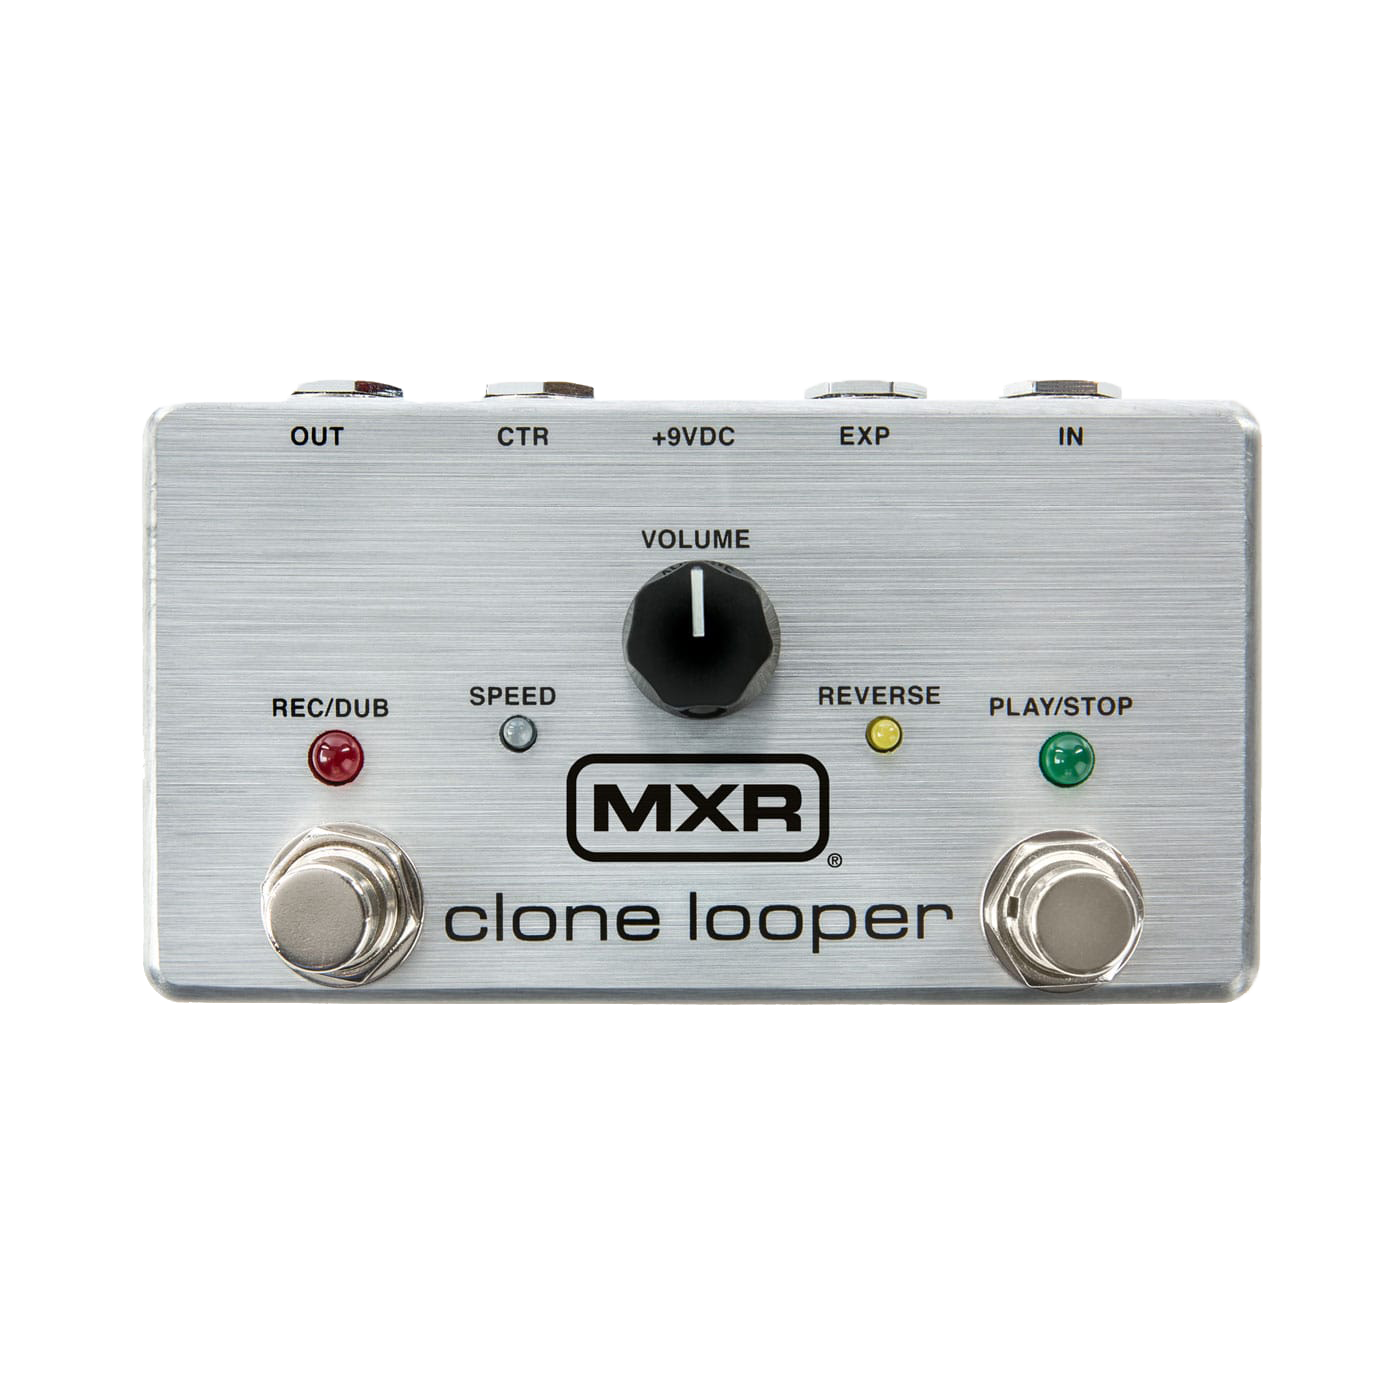 Top down of MXR M303 Clone Looper.